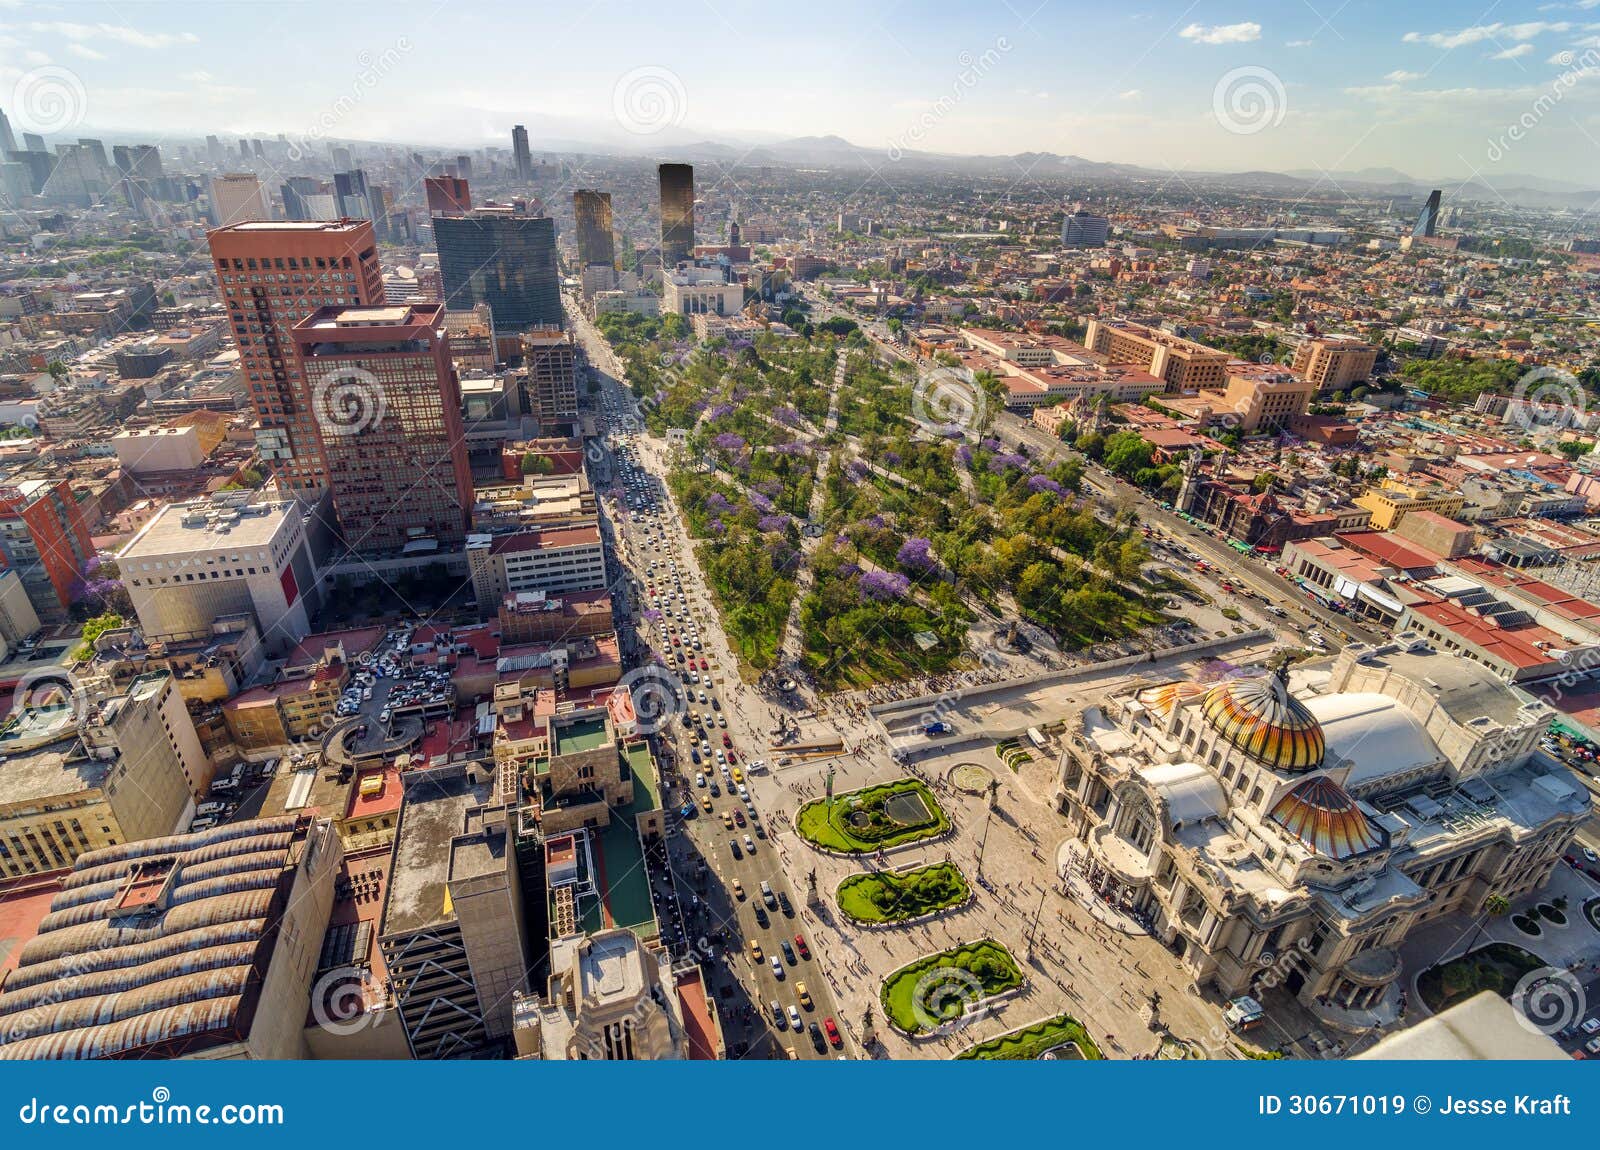 mexico city aerial view